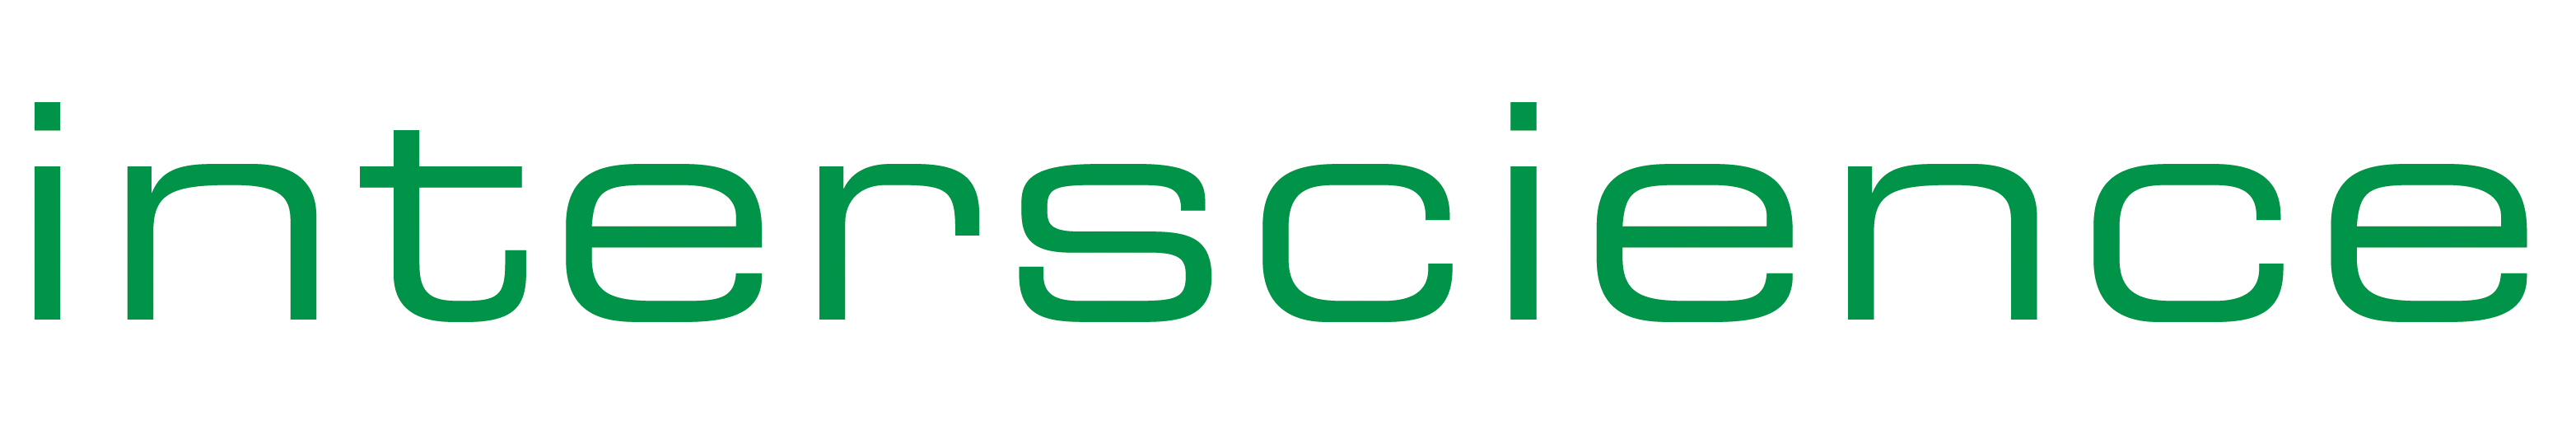 Interscience logo RGB 300ppp